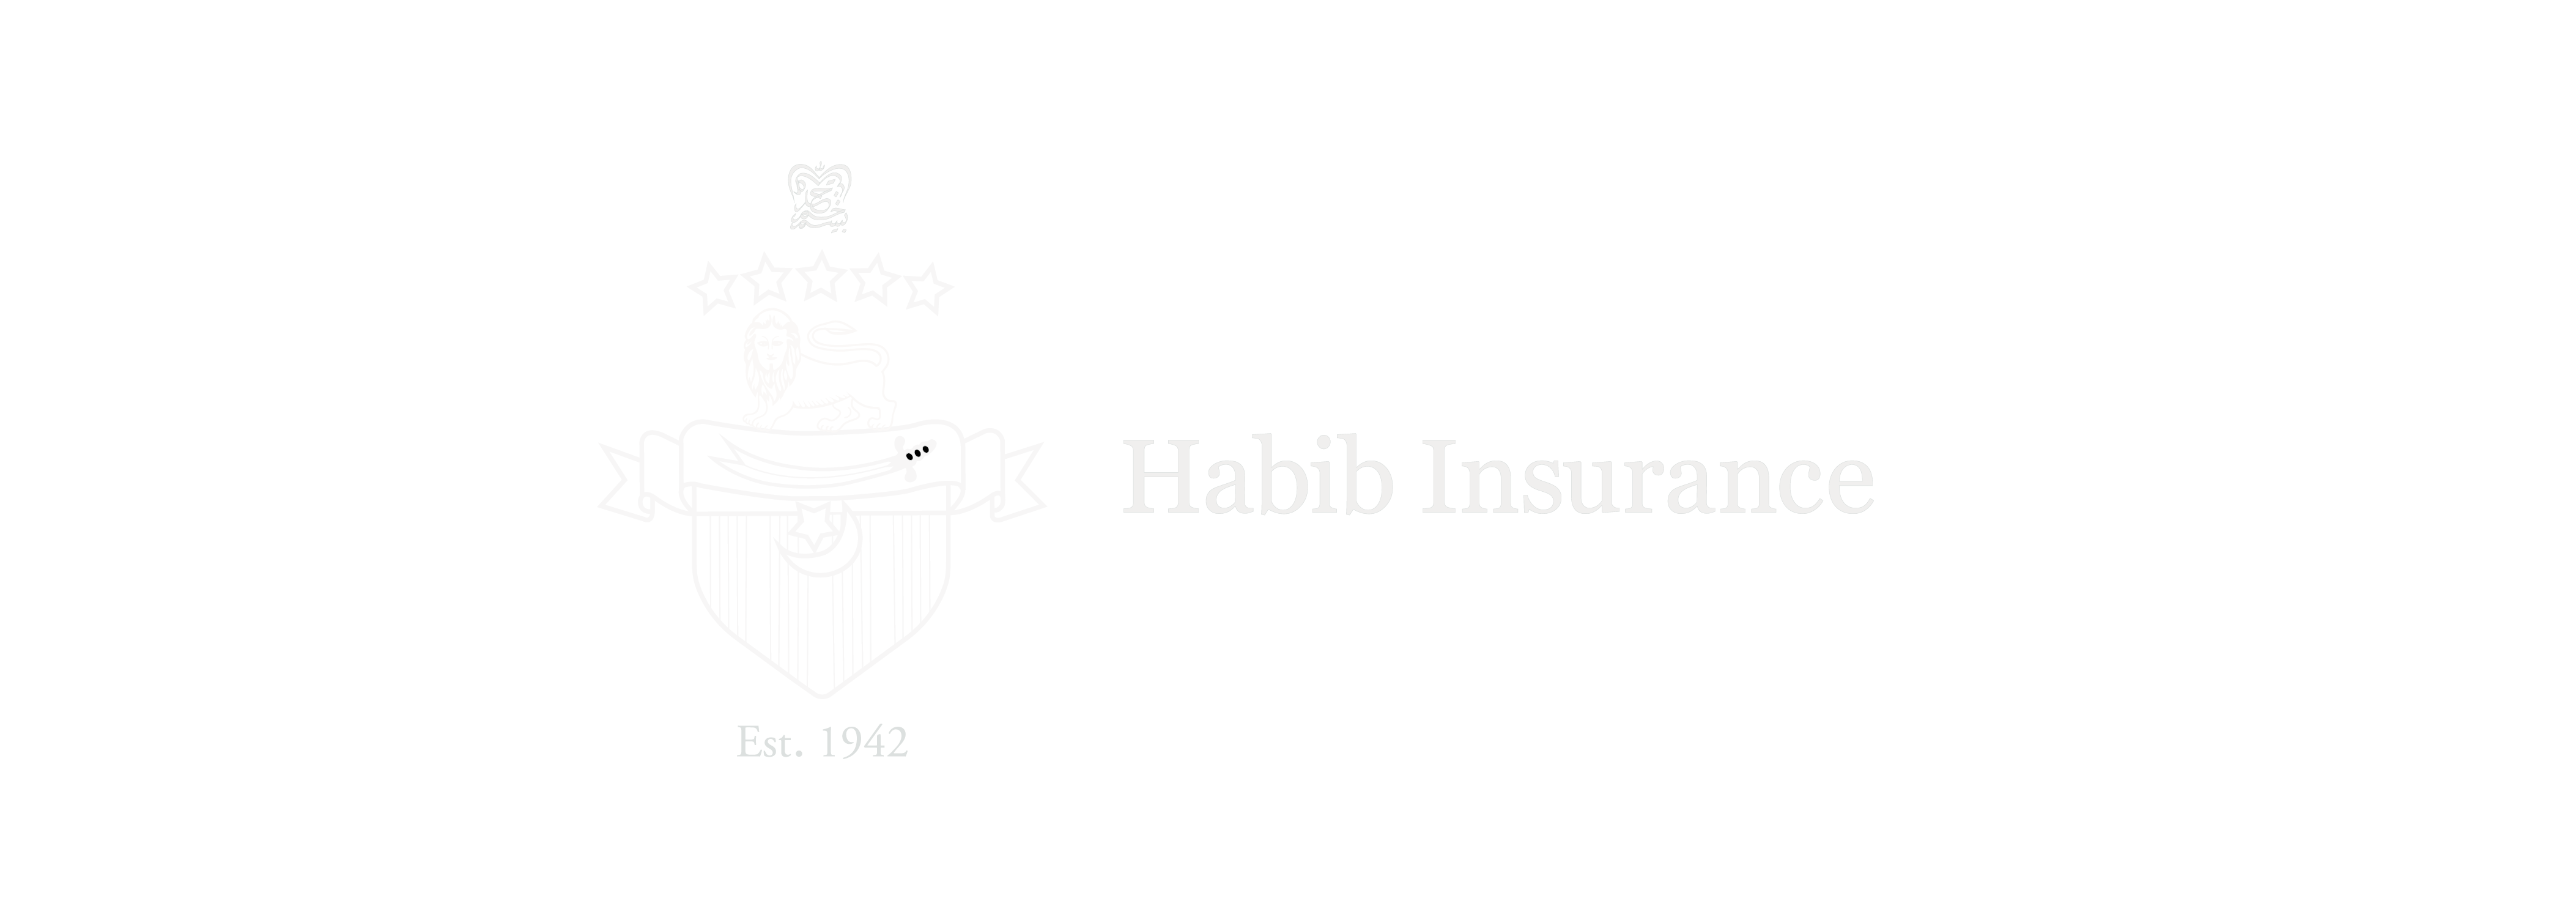 Habib Insurance